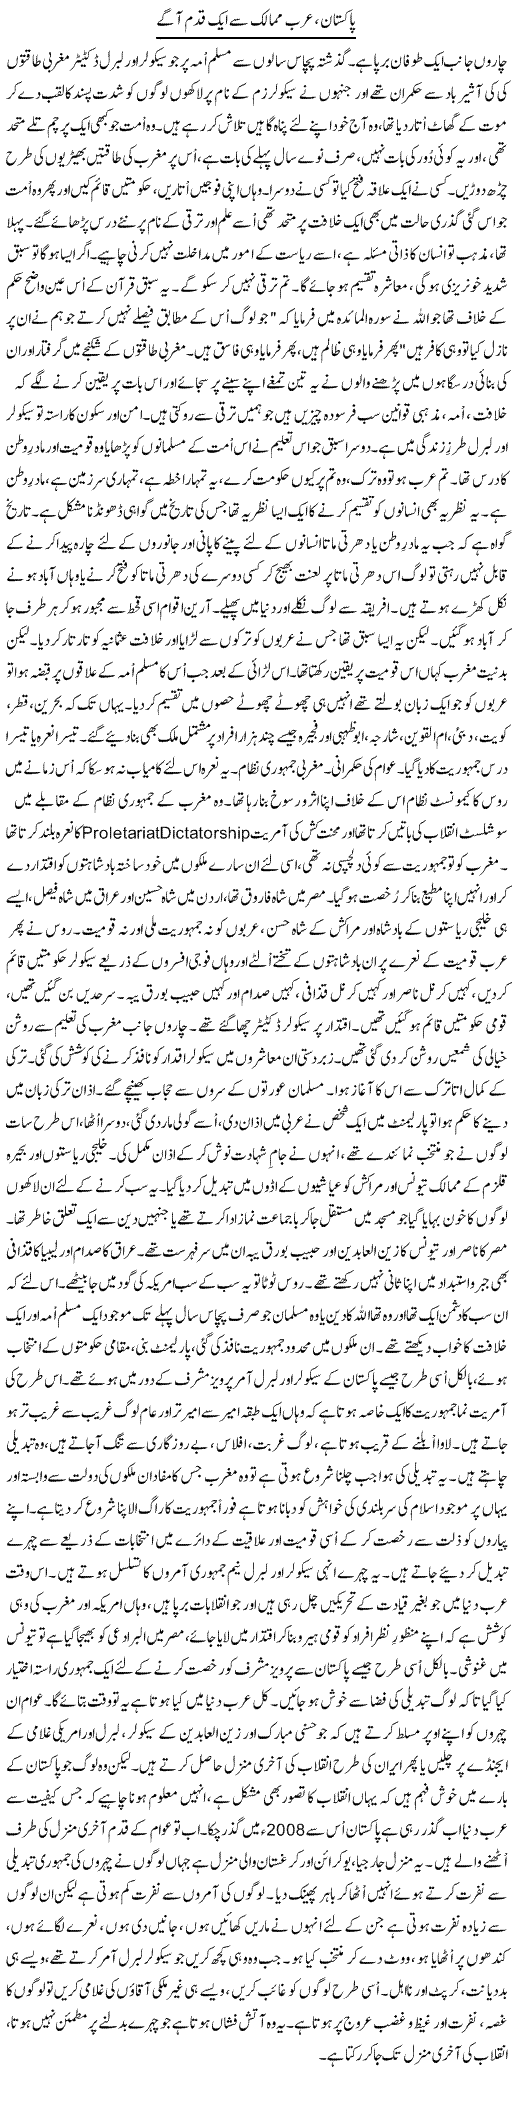 Pakistan is Ahead of Arabs Express Column Orya Maqbool 5 February 2011